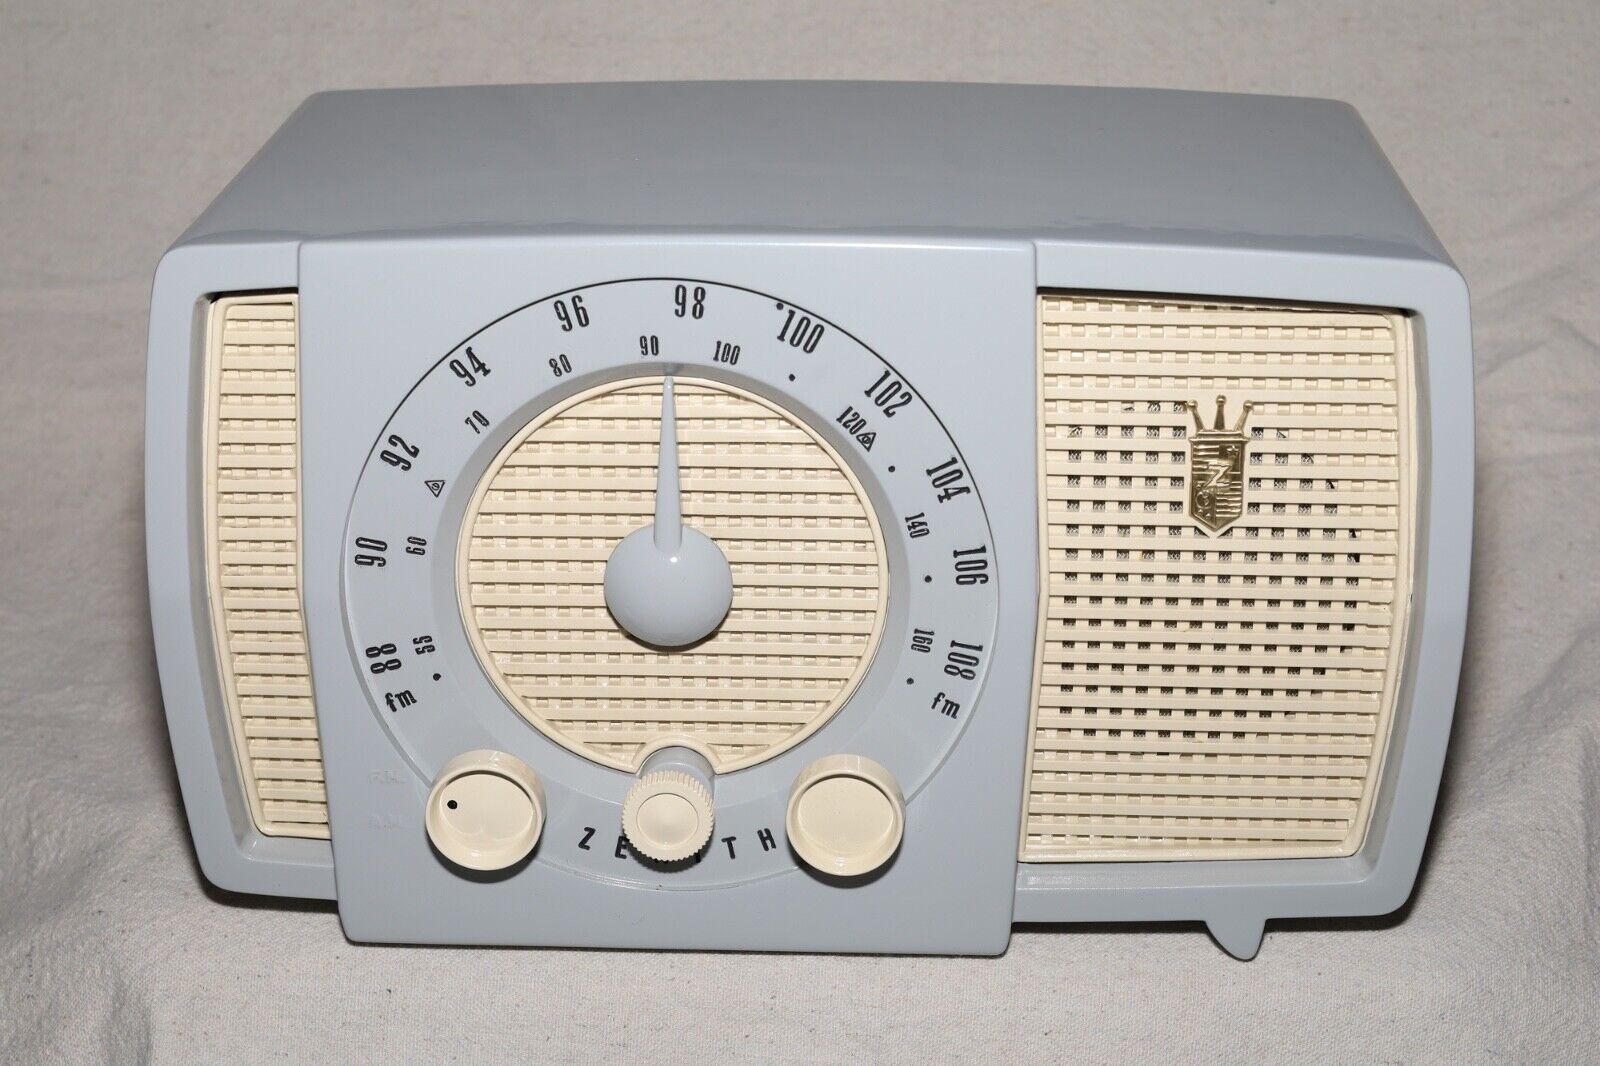 ZENITH  Model Y723 AM- FM radio Completely Restored - Grey color